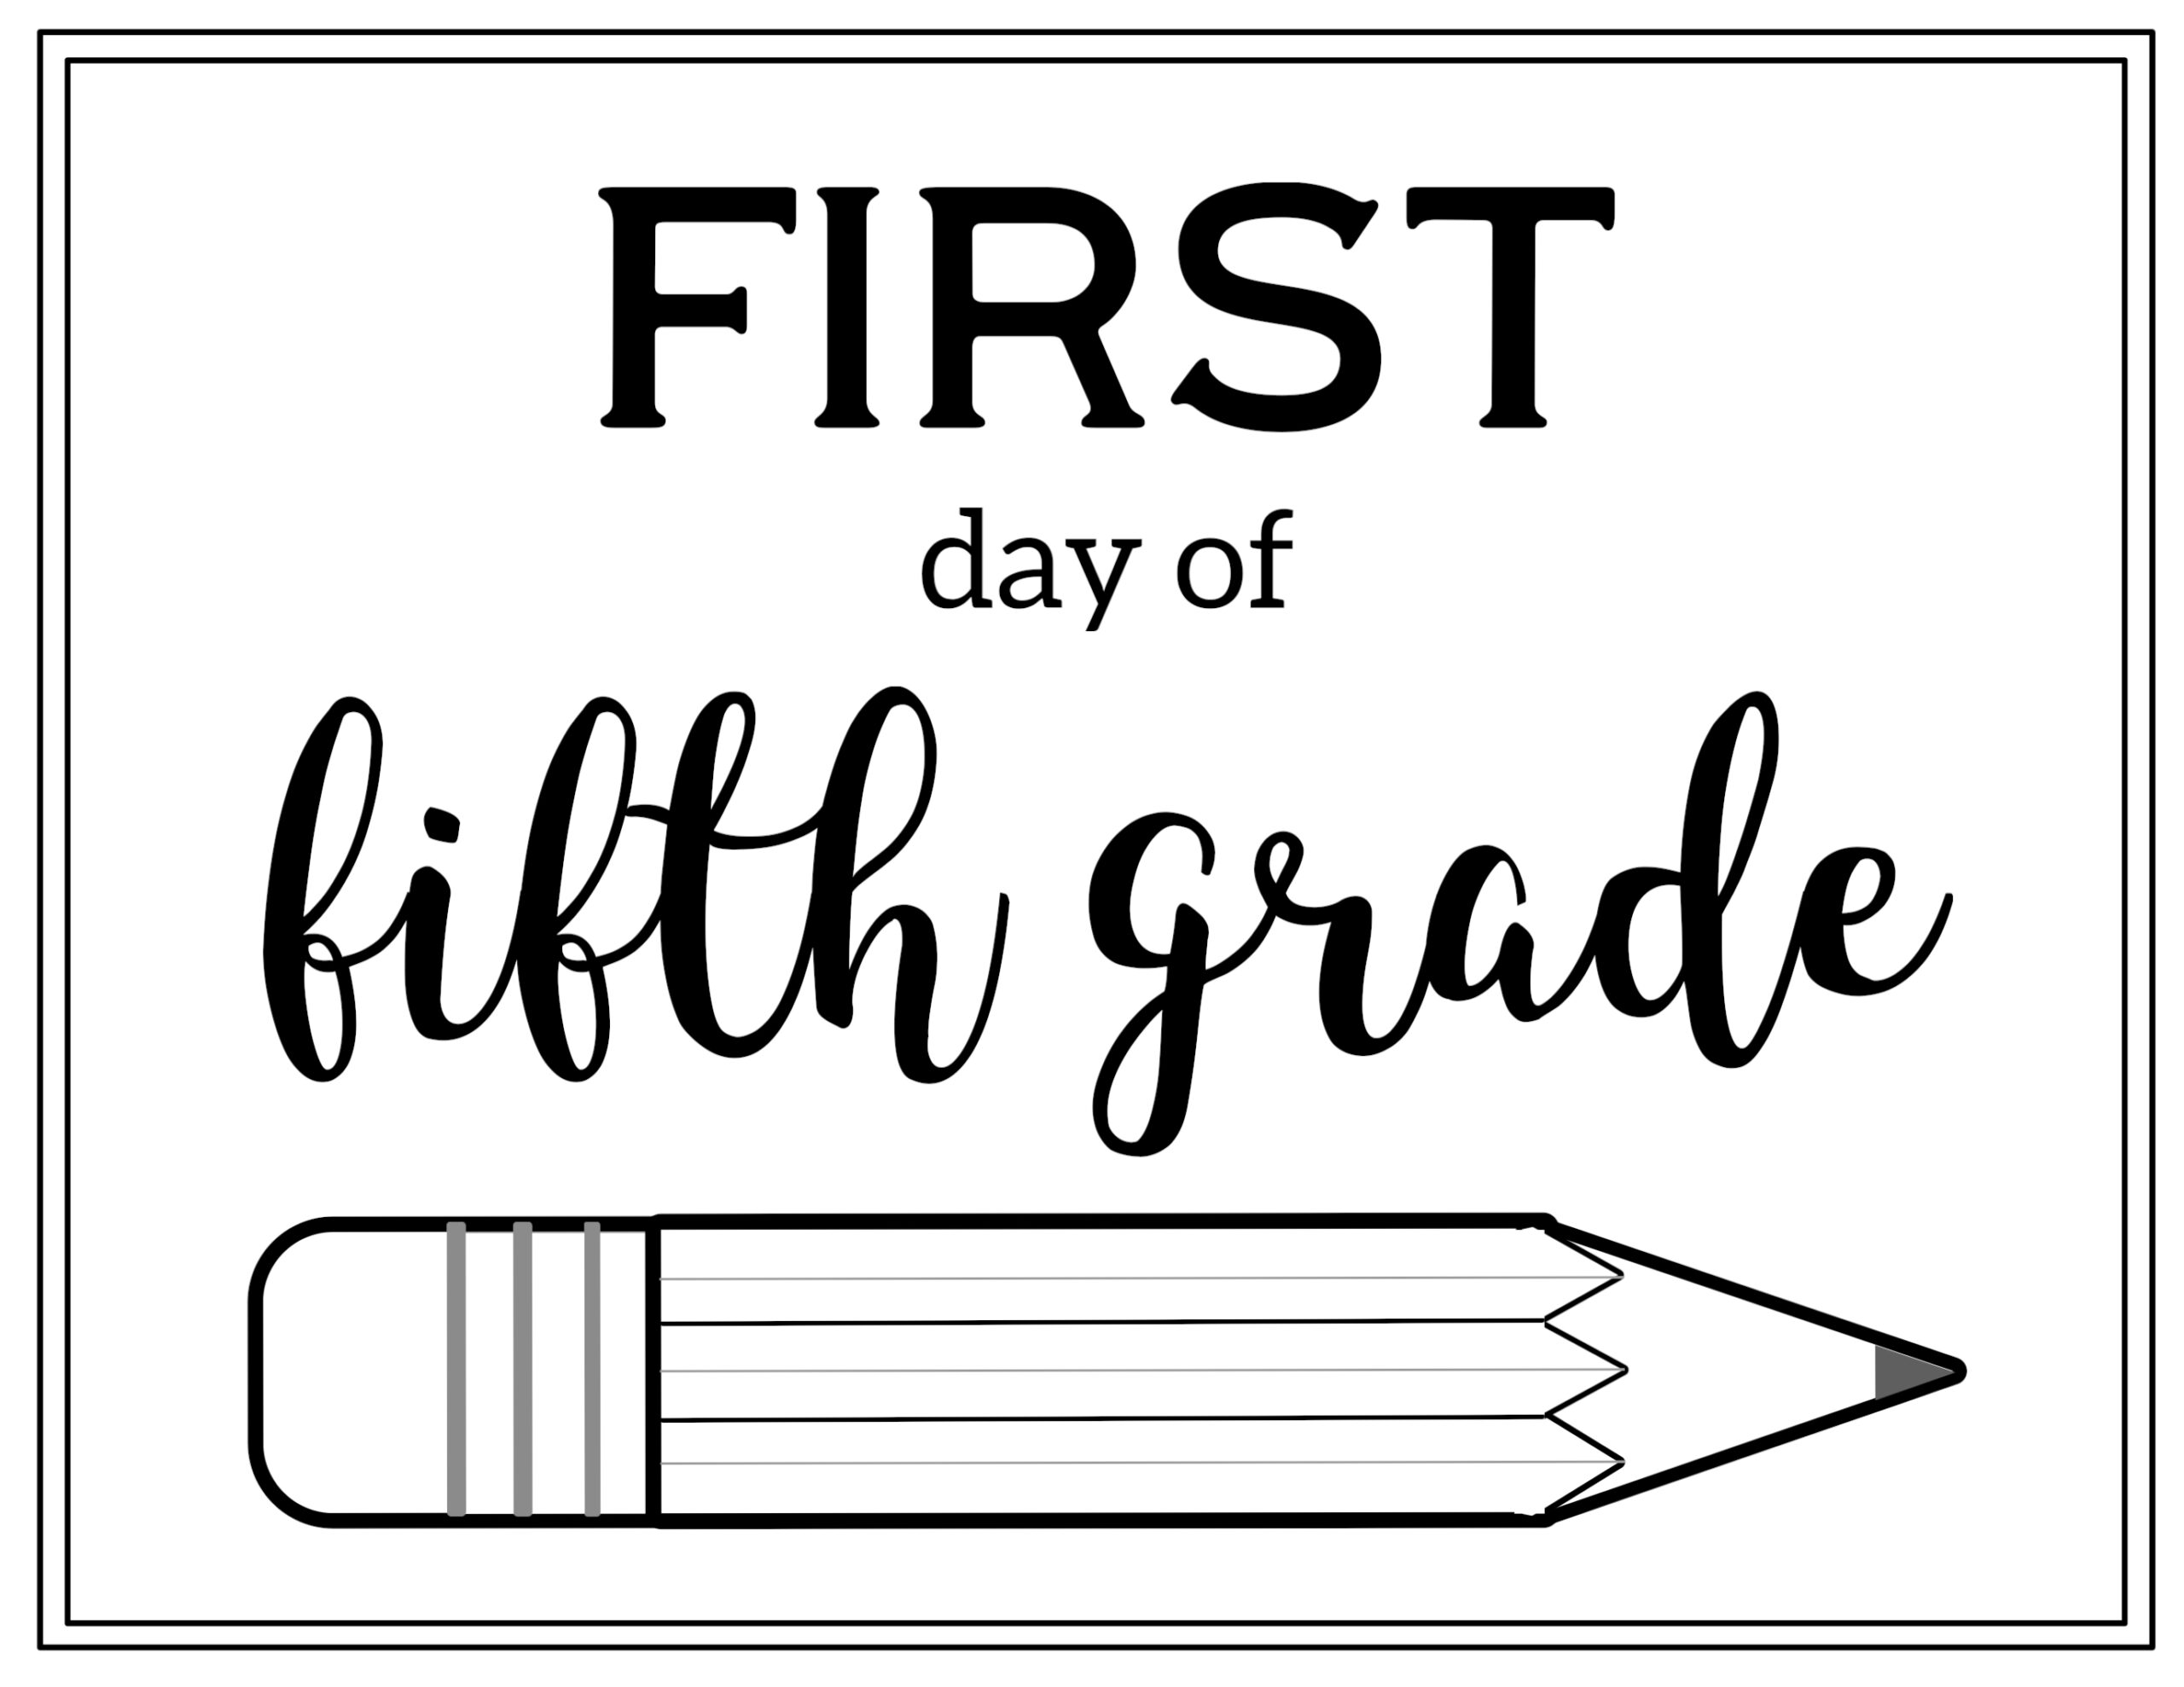 1st-day-of-school-5th-grade-printable-sign-2022-freeprintablesign